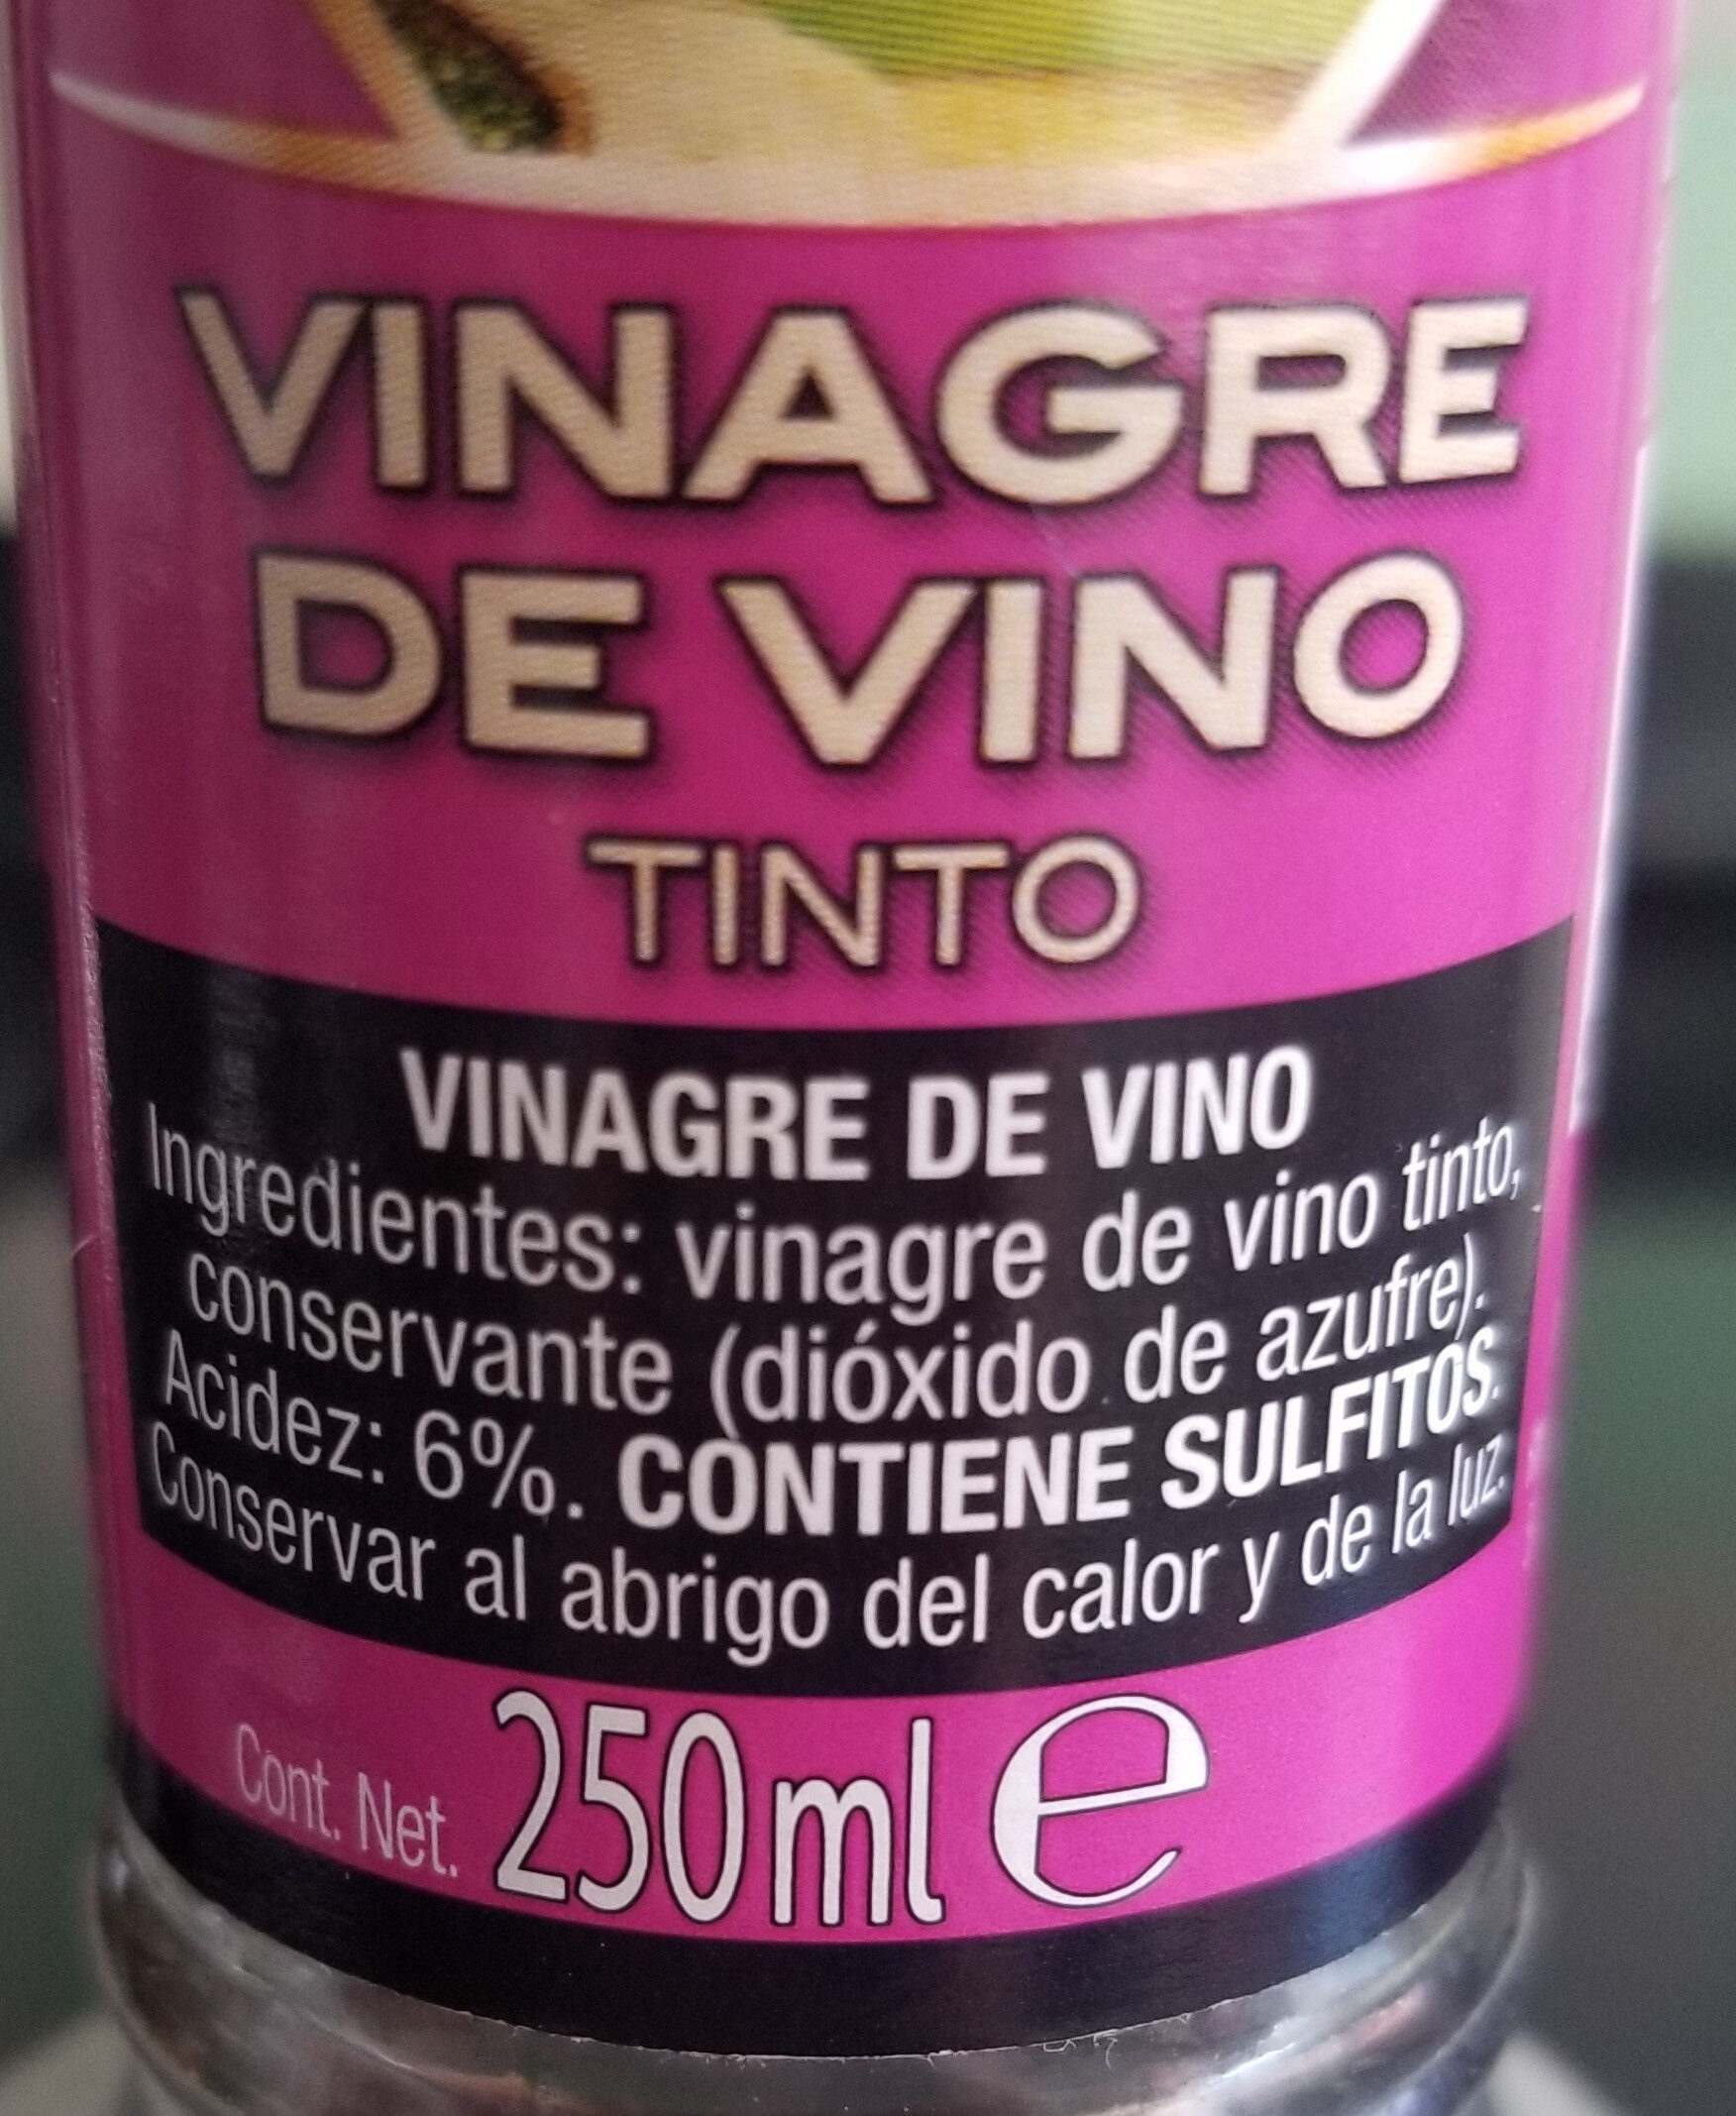 Vinagre de vino tinto - Ingredientes